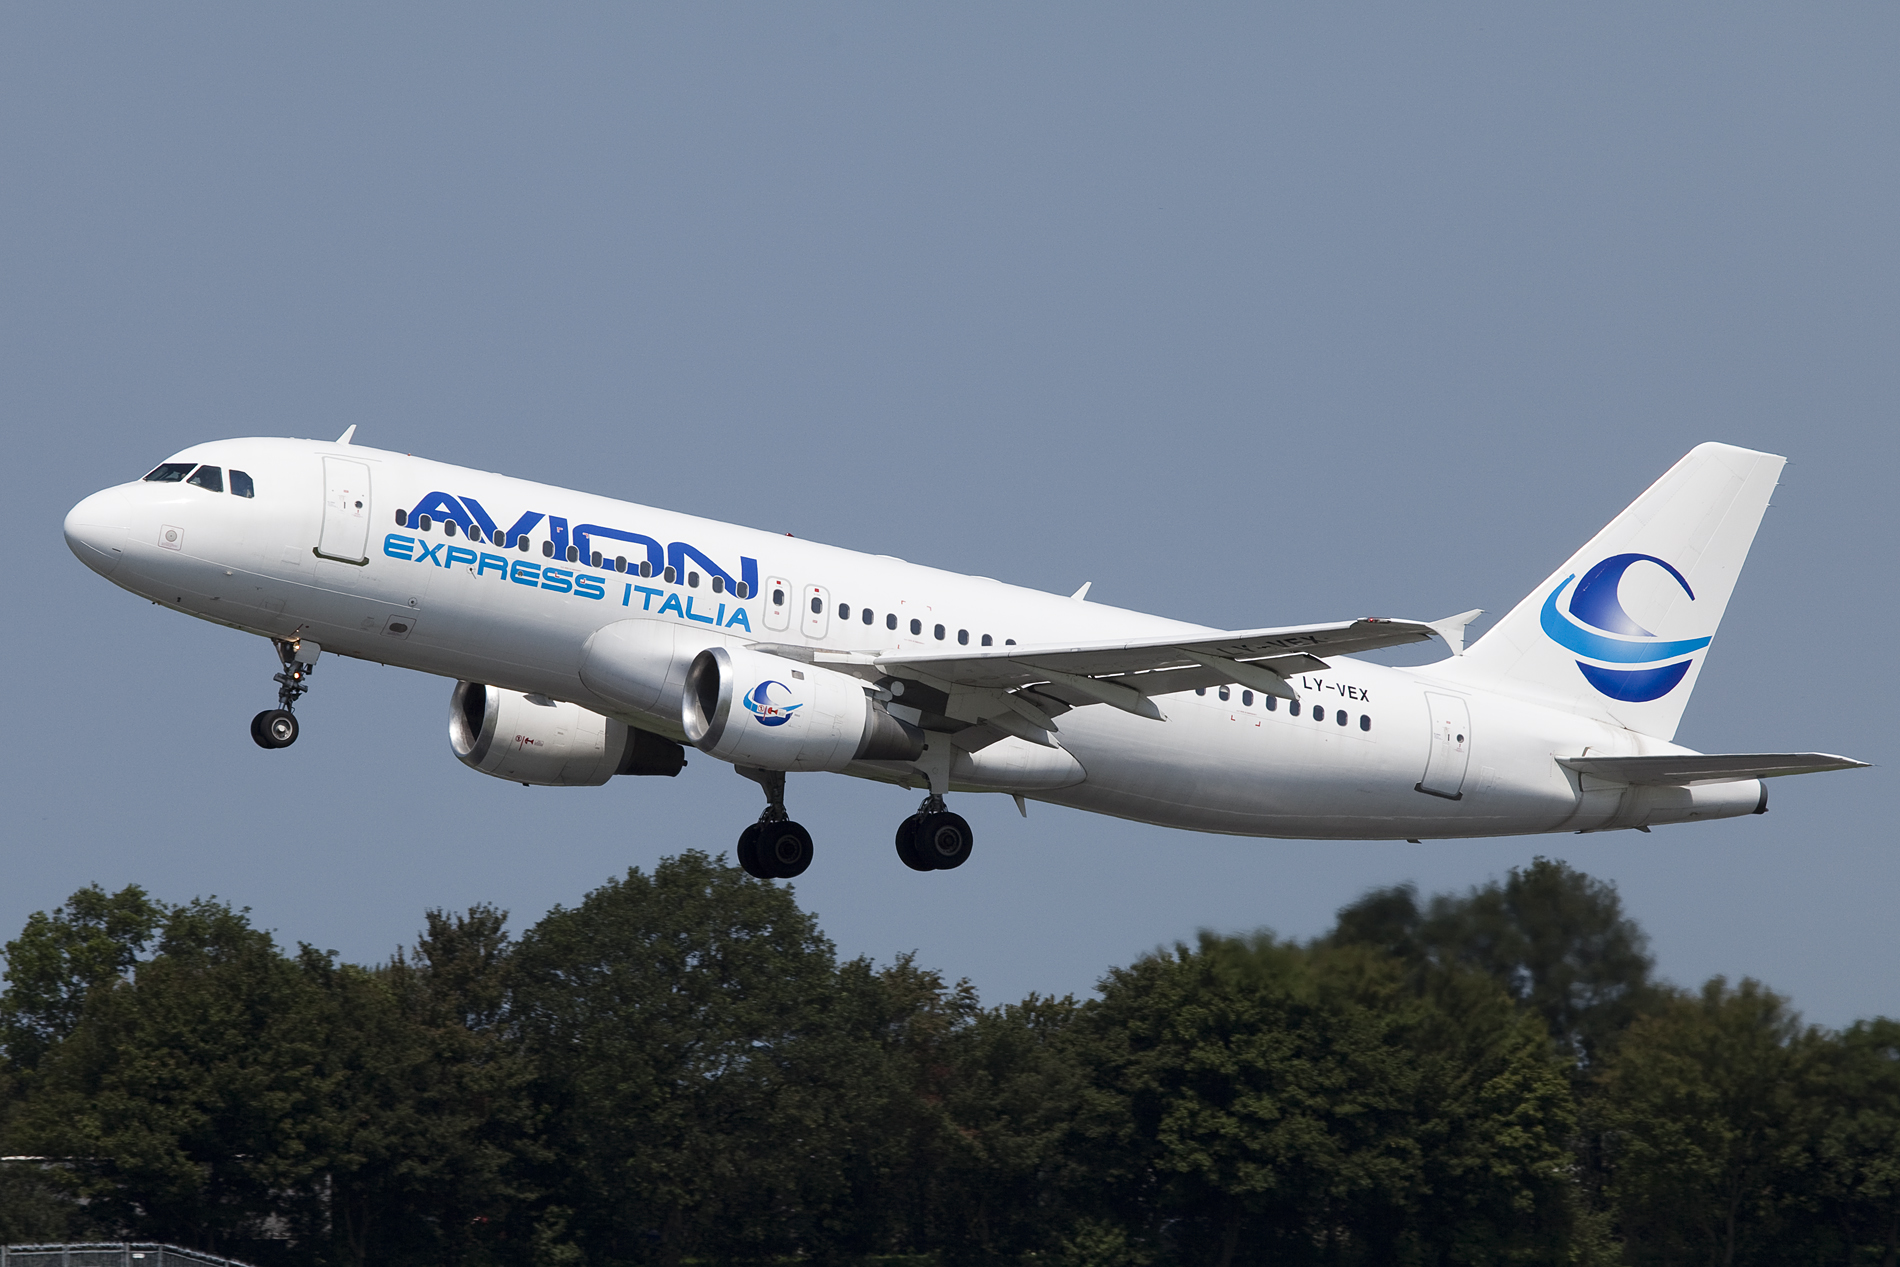 File:LY-VEX A320 Avion Express Italia (5941024386).jpg - Wikimedia Commons